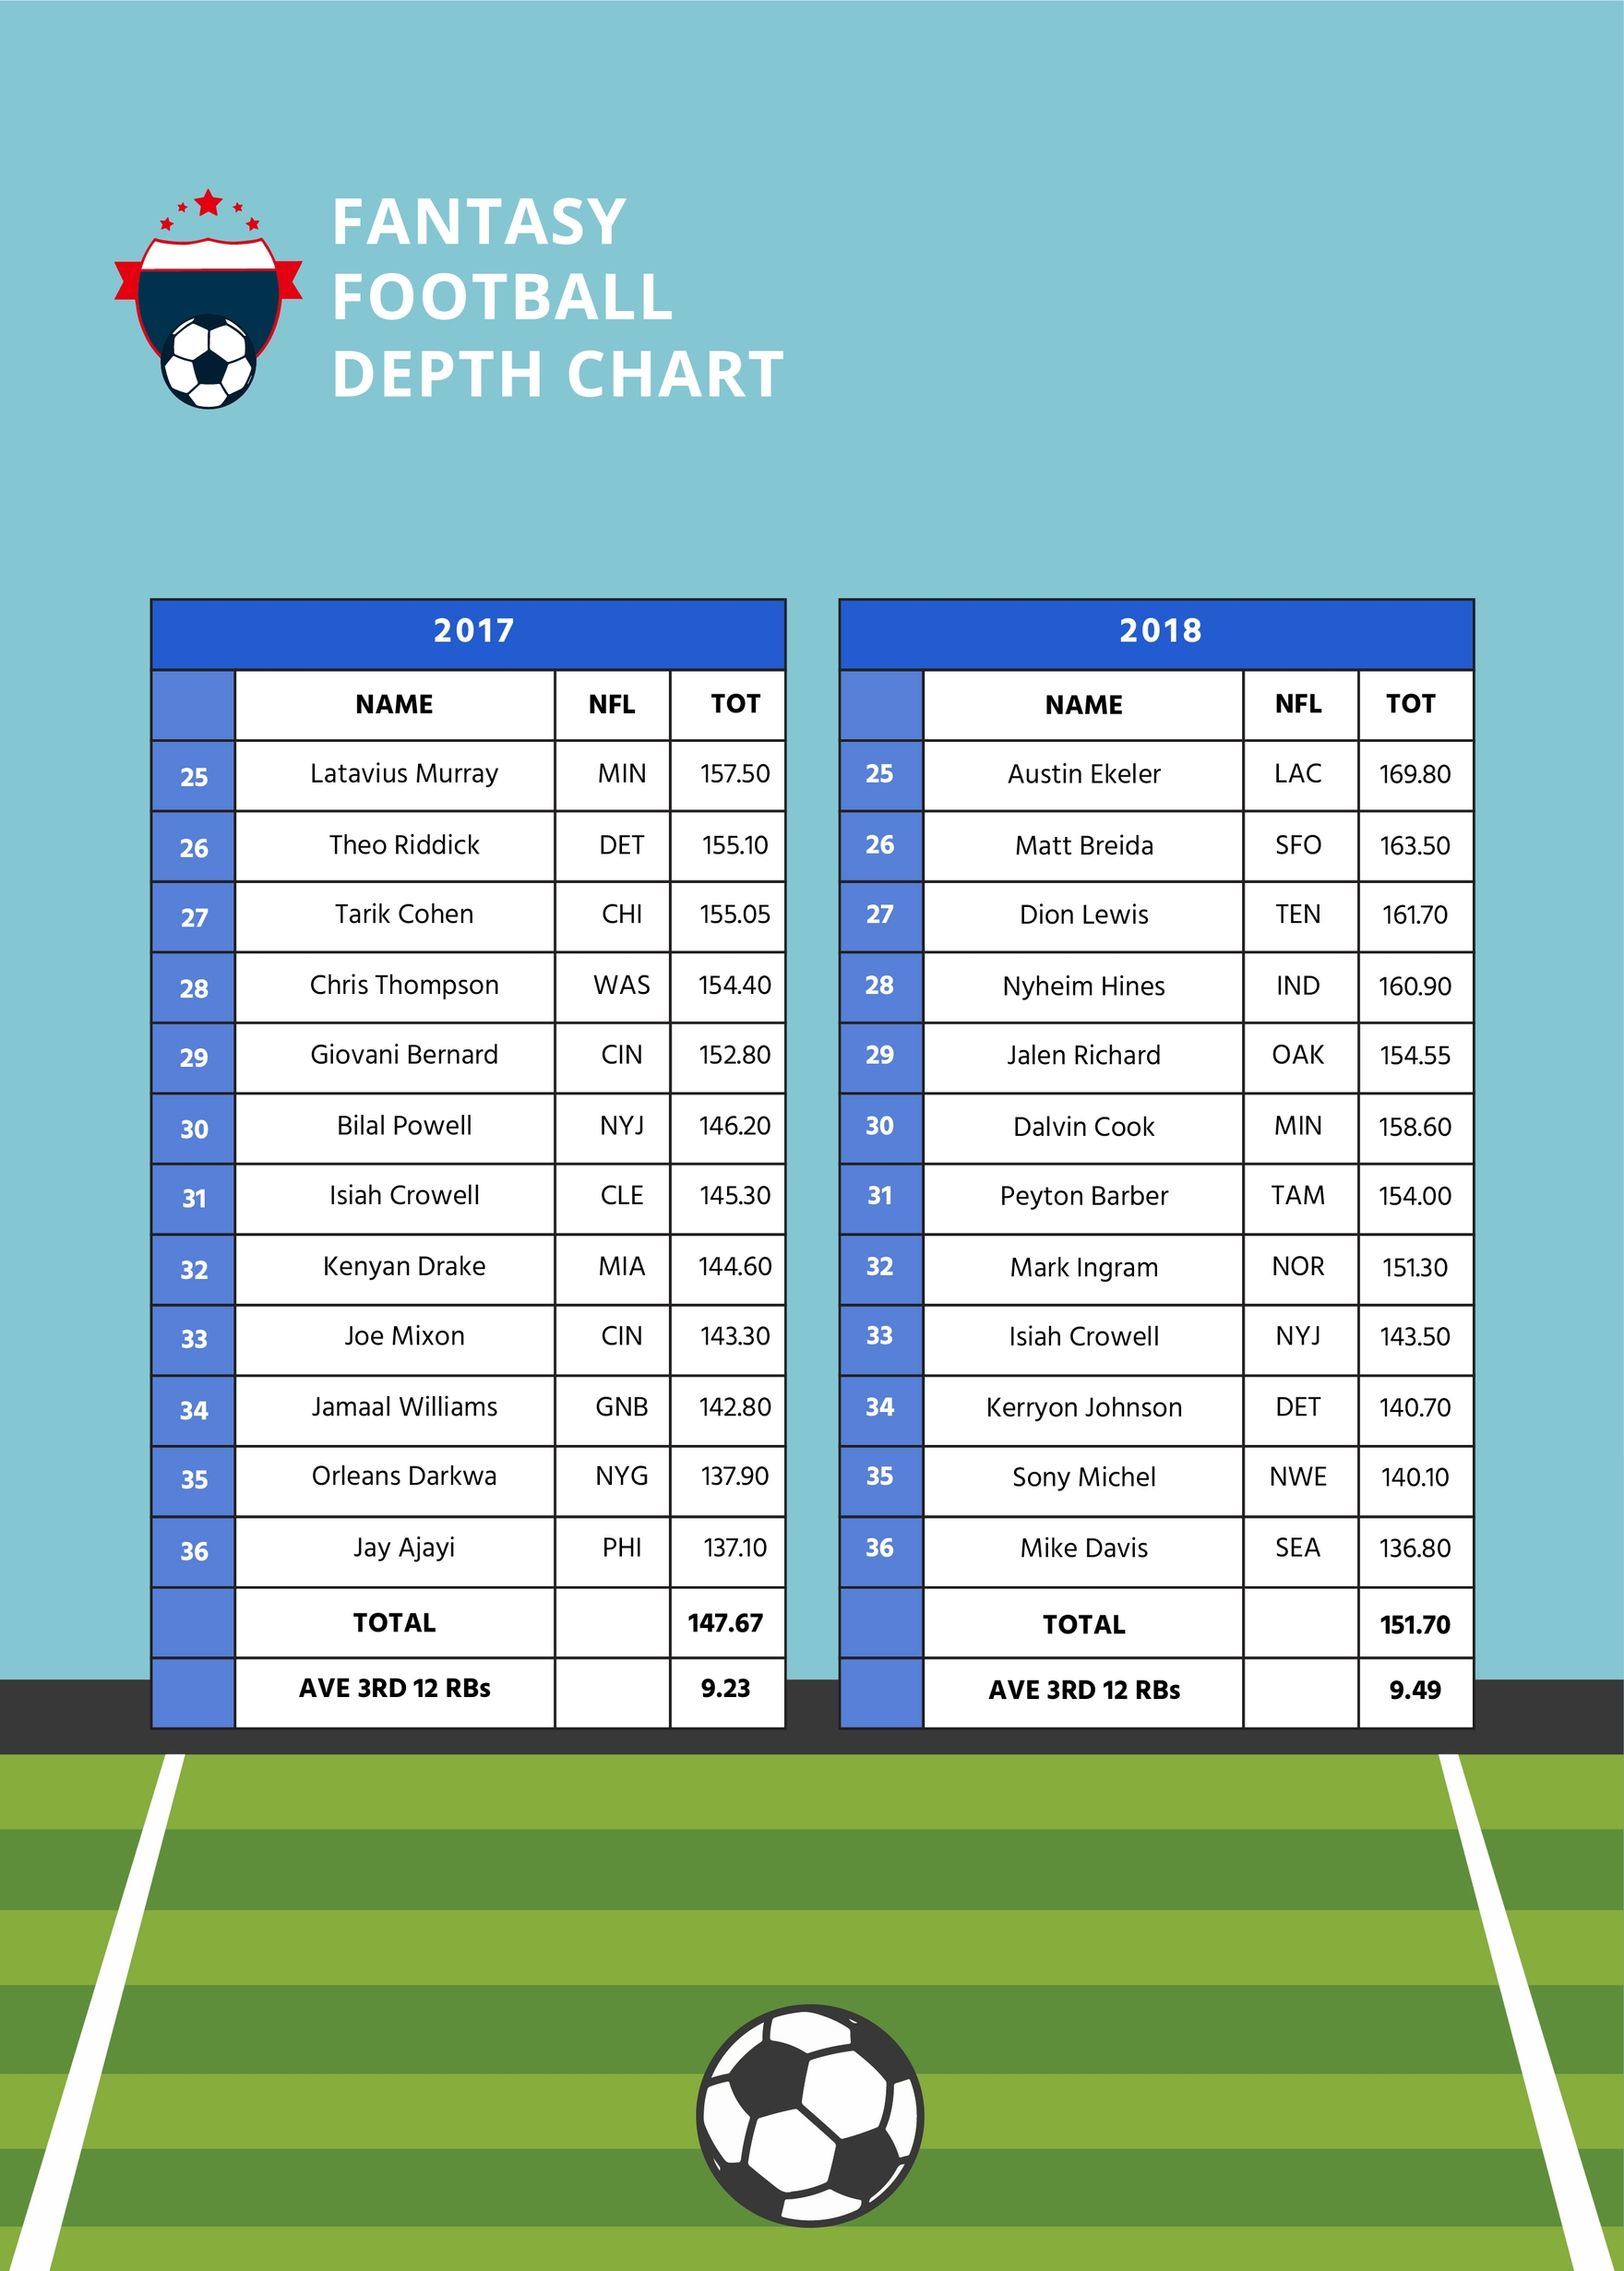 Free Fantasy Football Depth Chart Download in PDF, Illustrator